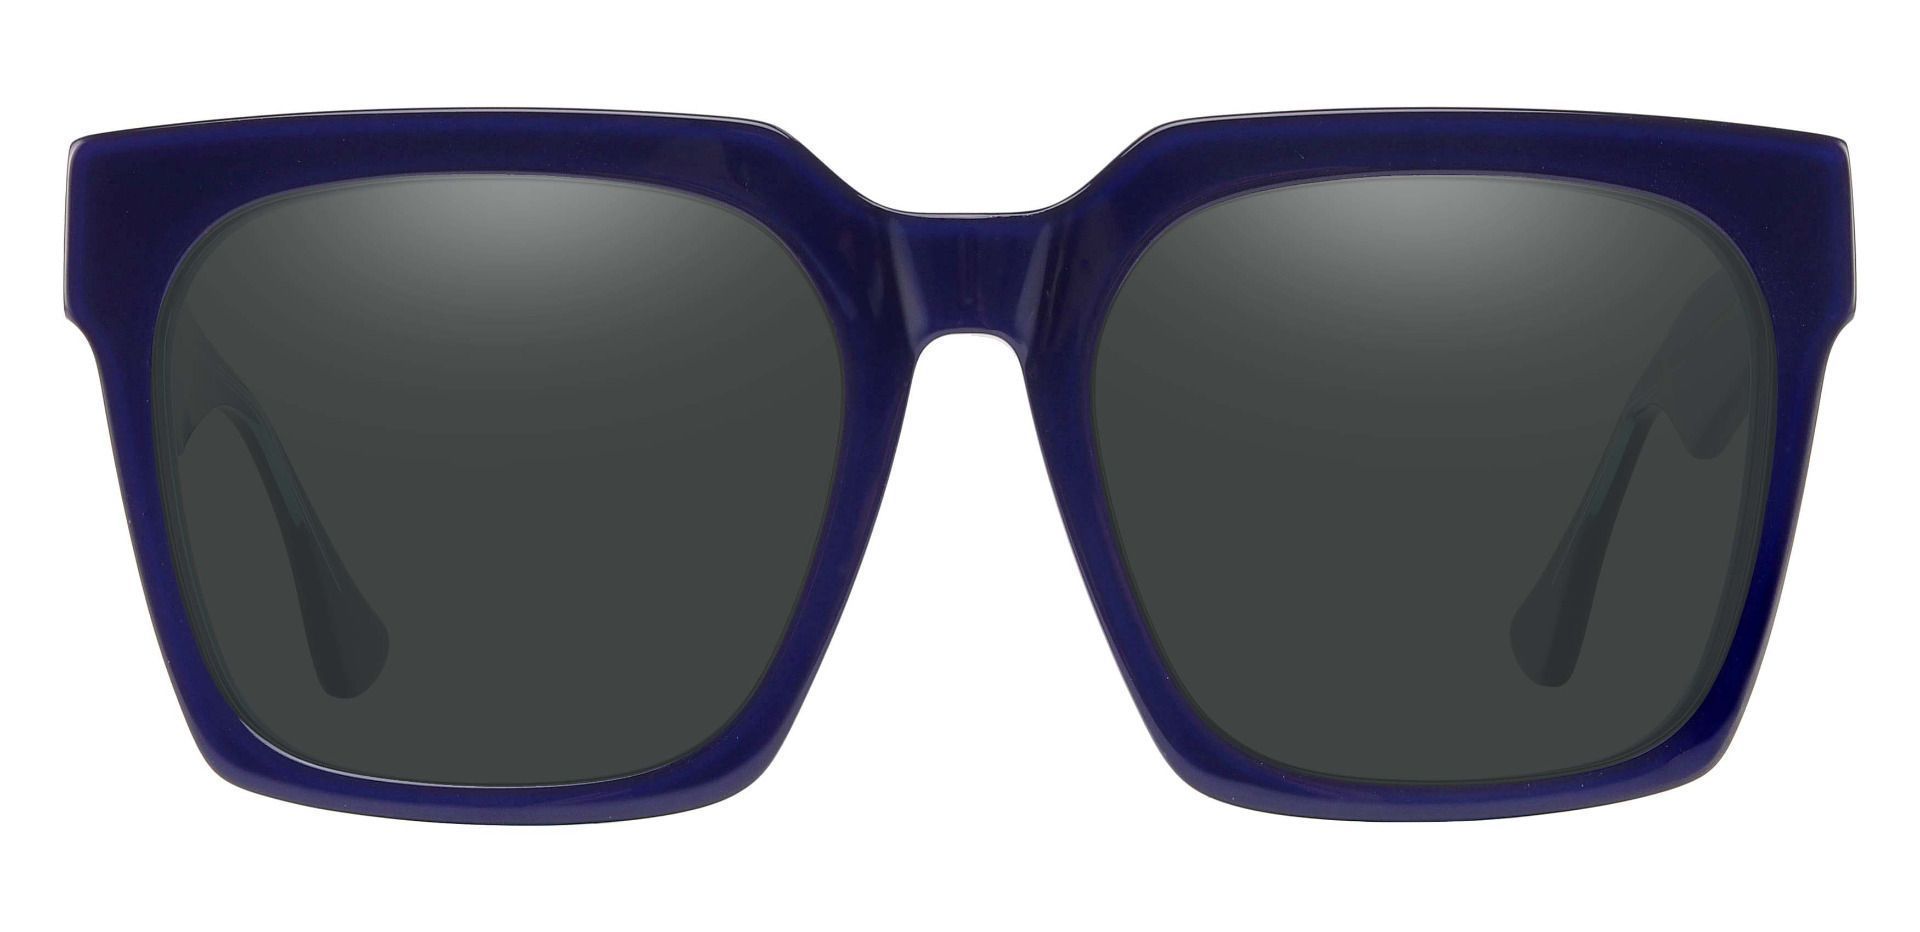 Harlan Square Prescription Sunglasses - Blue Frame With Gray Lenses